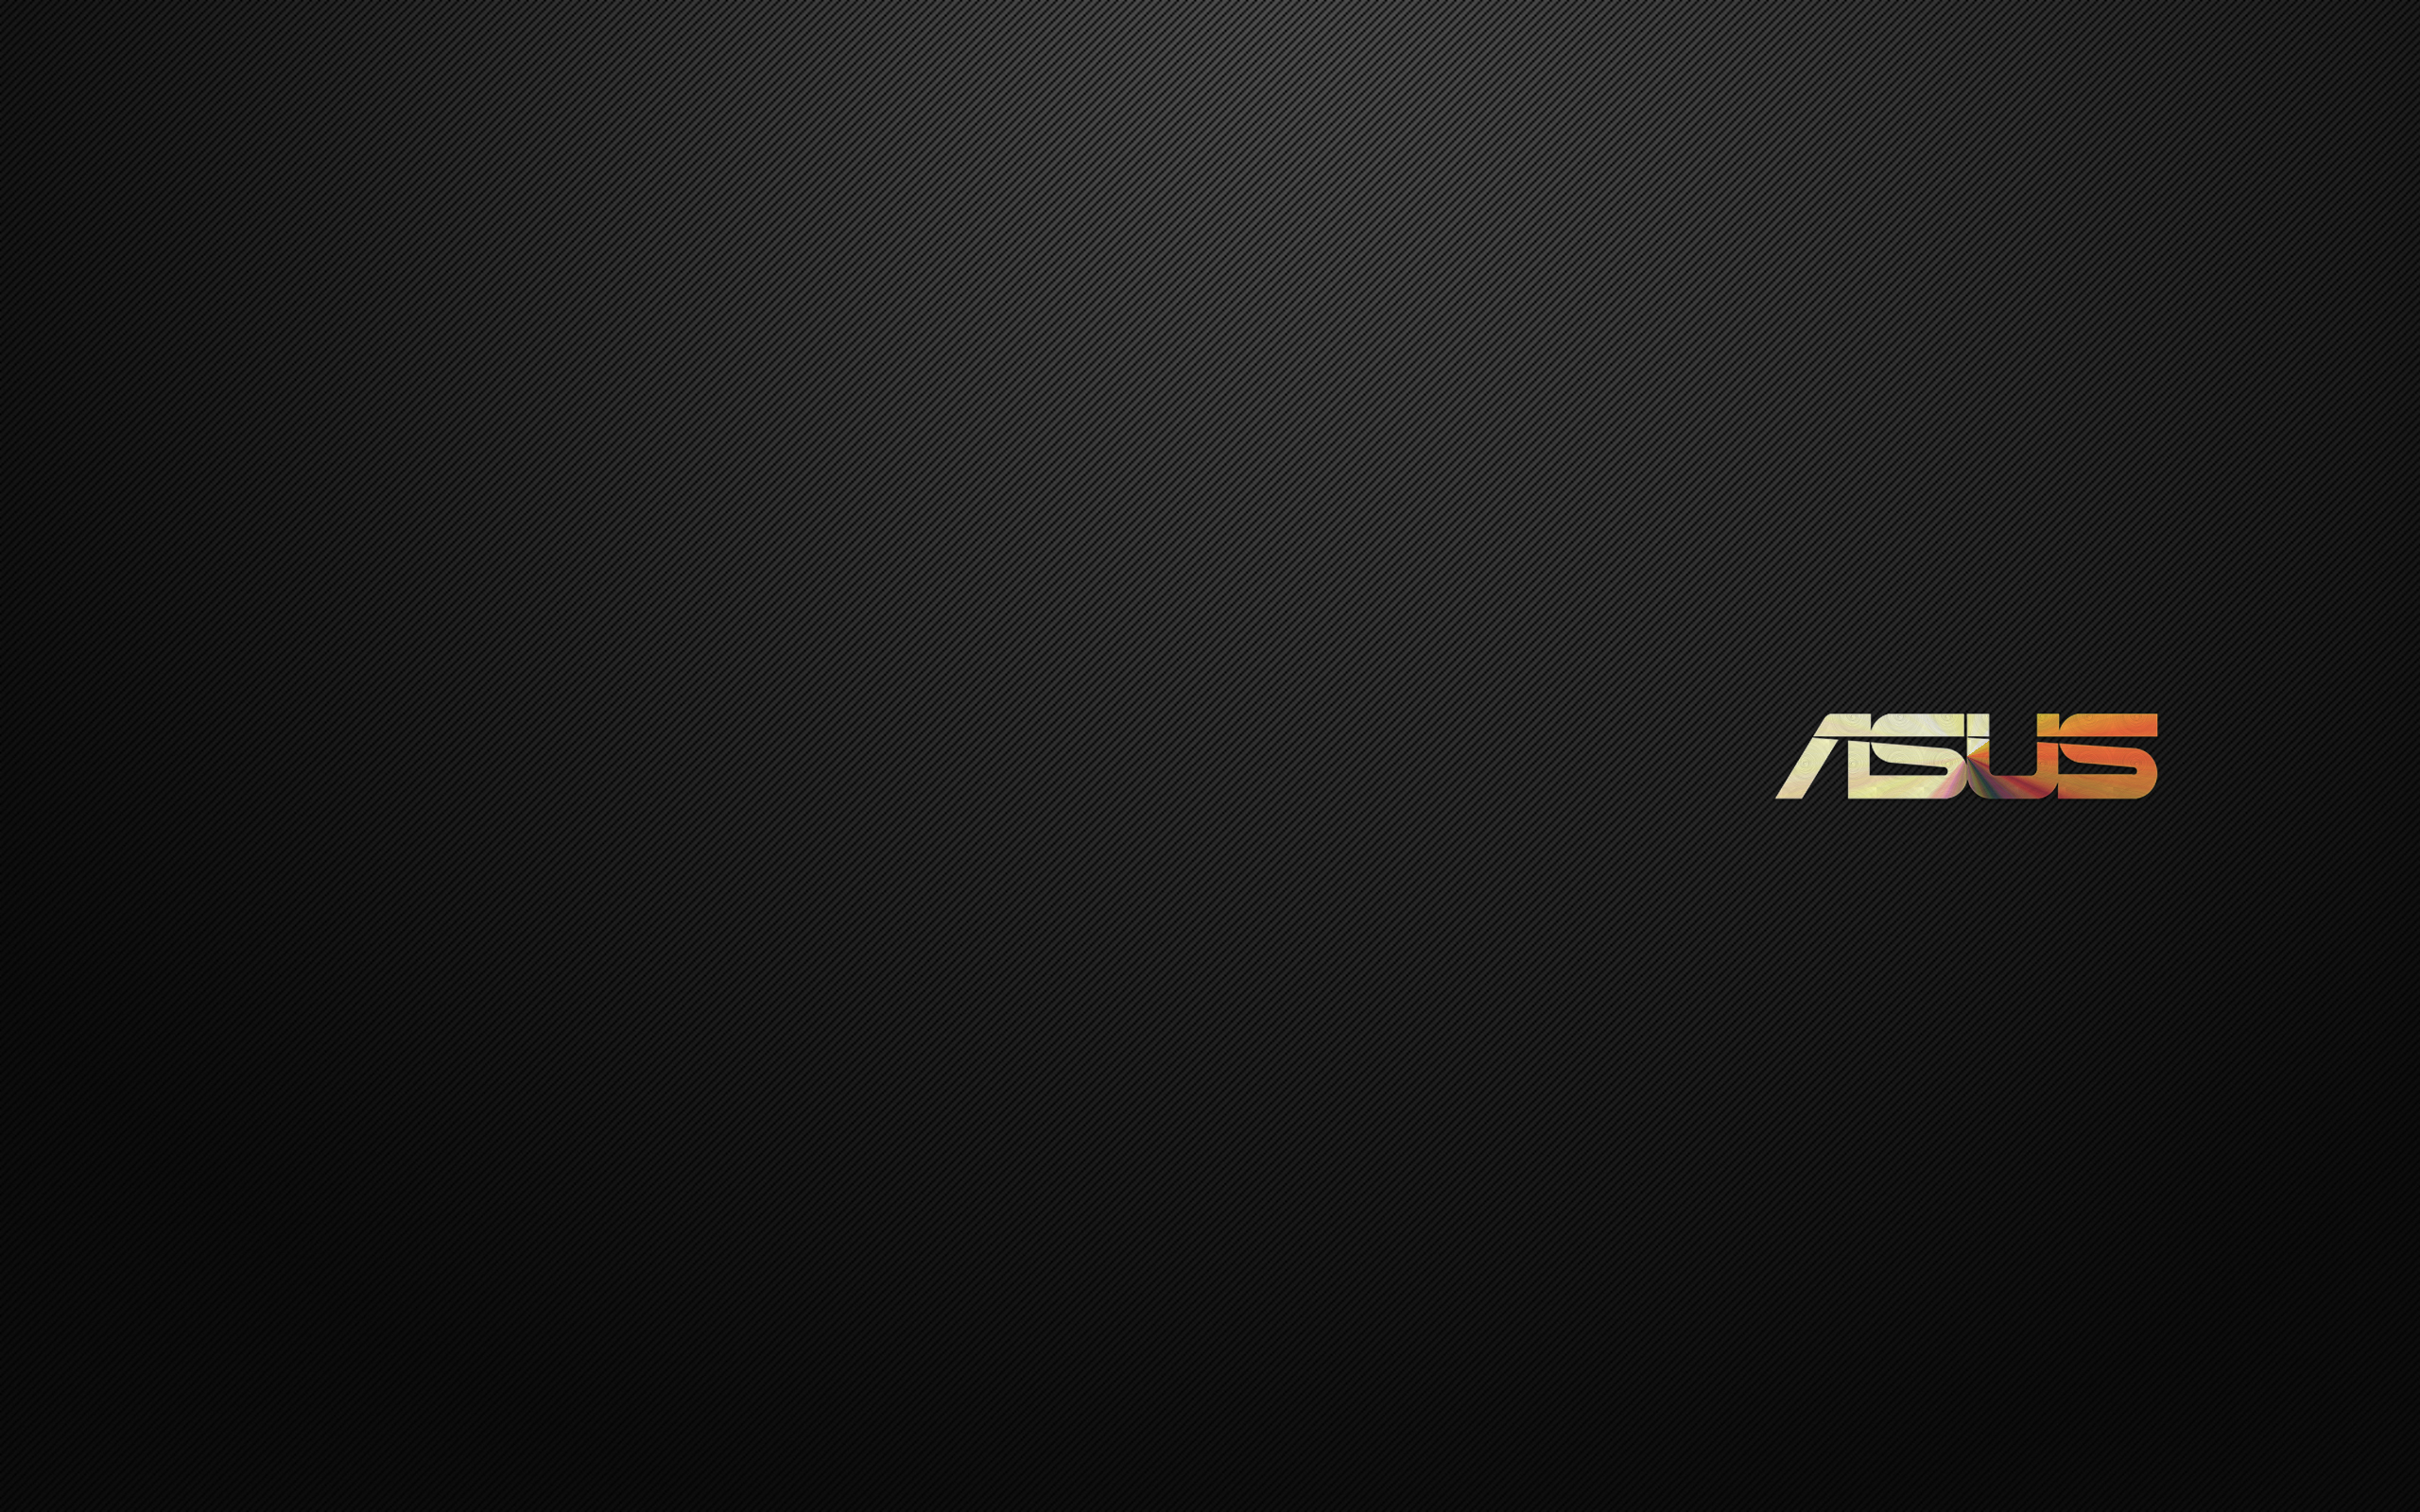 General 2560x1600 ASUS logo digital art simple background gradient